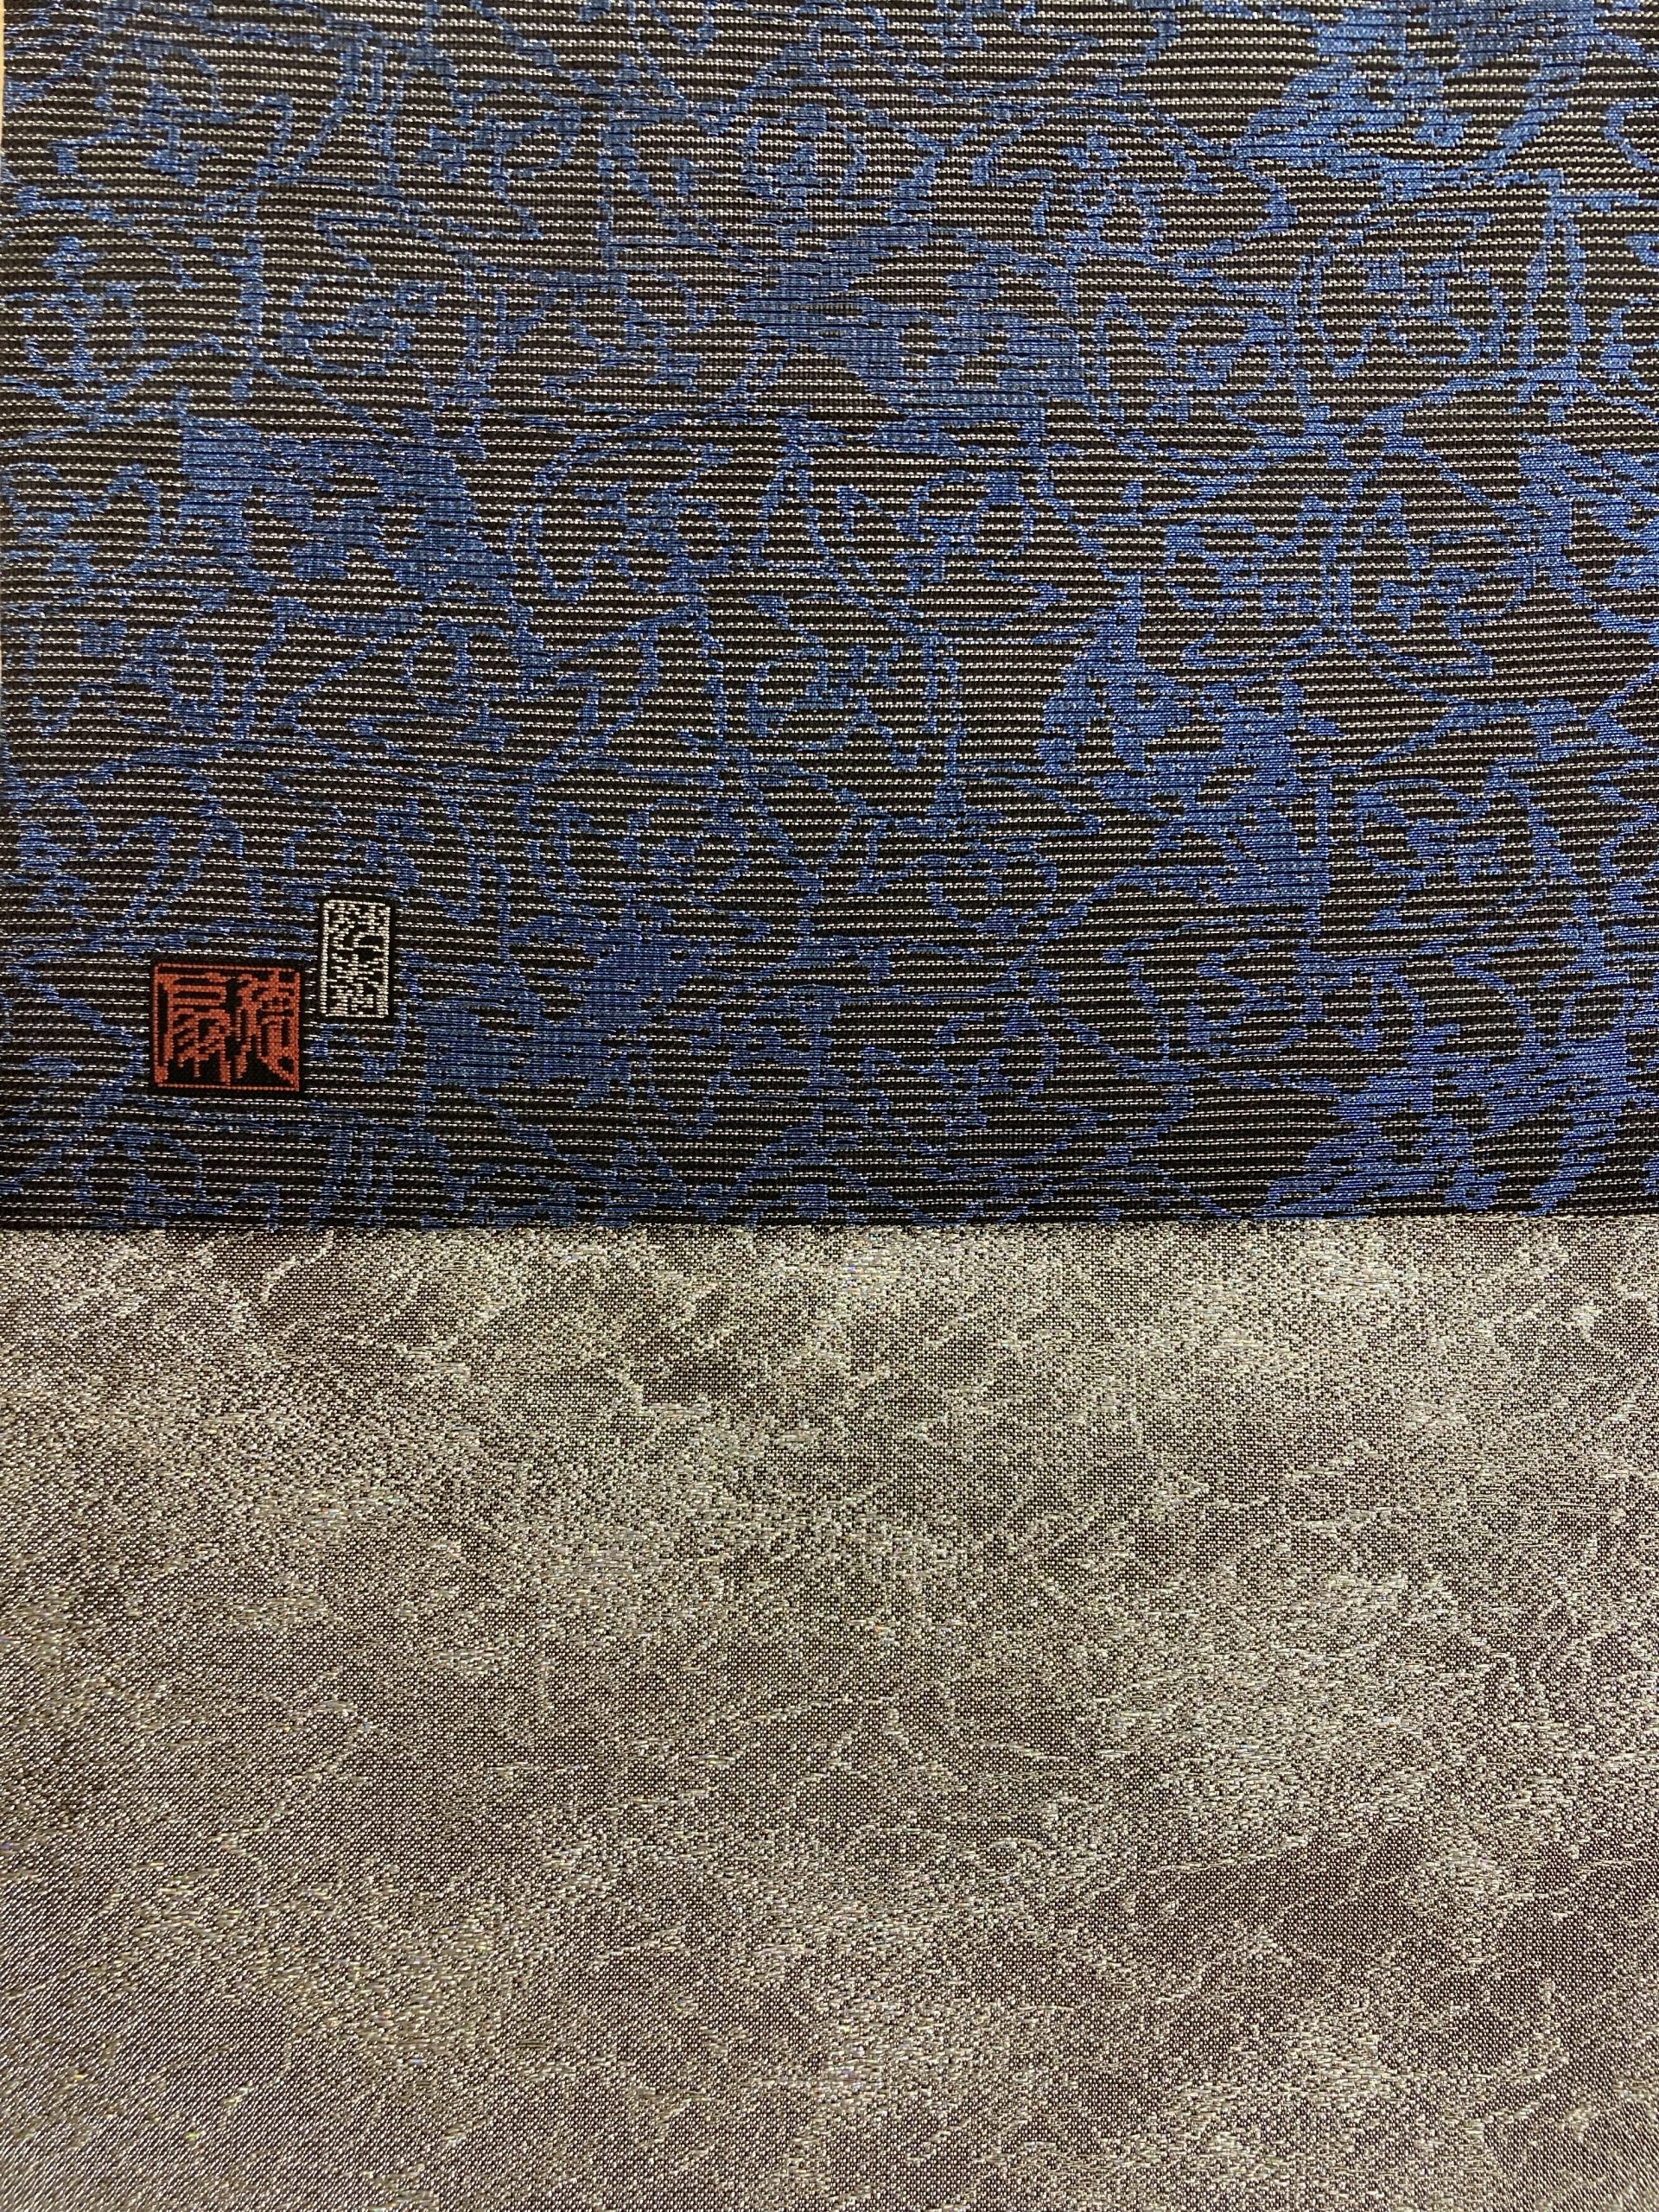 O-2004 袋帯 藤林徳扇 色鮮やかな織柄模様 プラチナ糸 木箱付 【残り